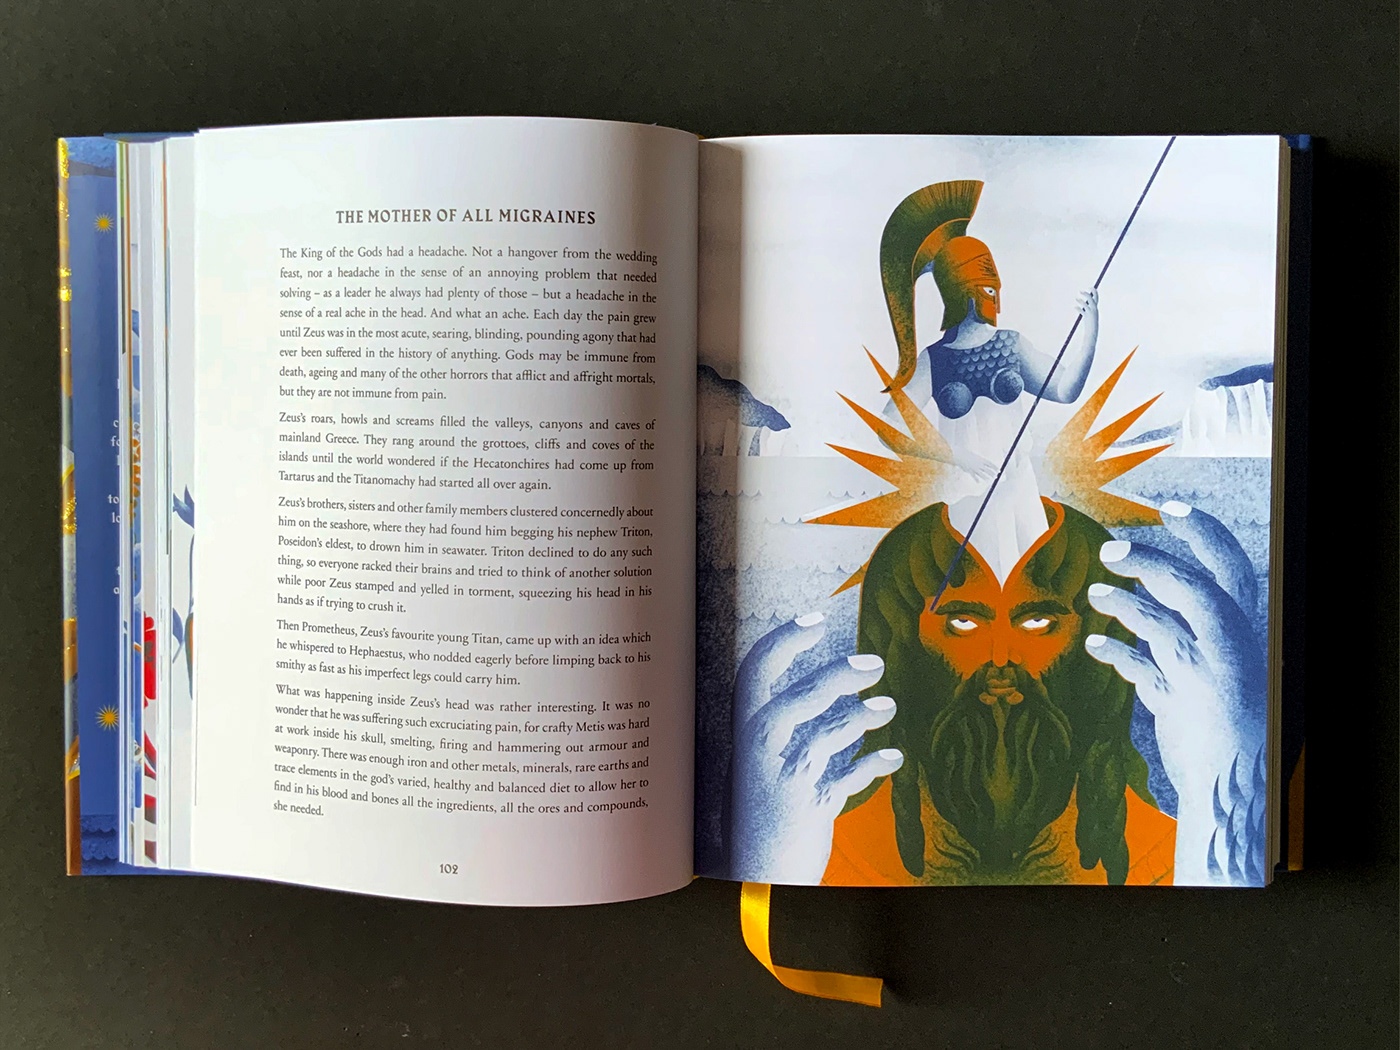 book Illustrated book DigitalIllustration ilustracion mythology greekmythology goddess Digital Art  mythos StephenFry